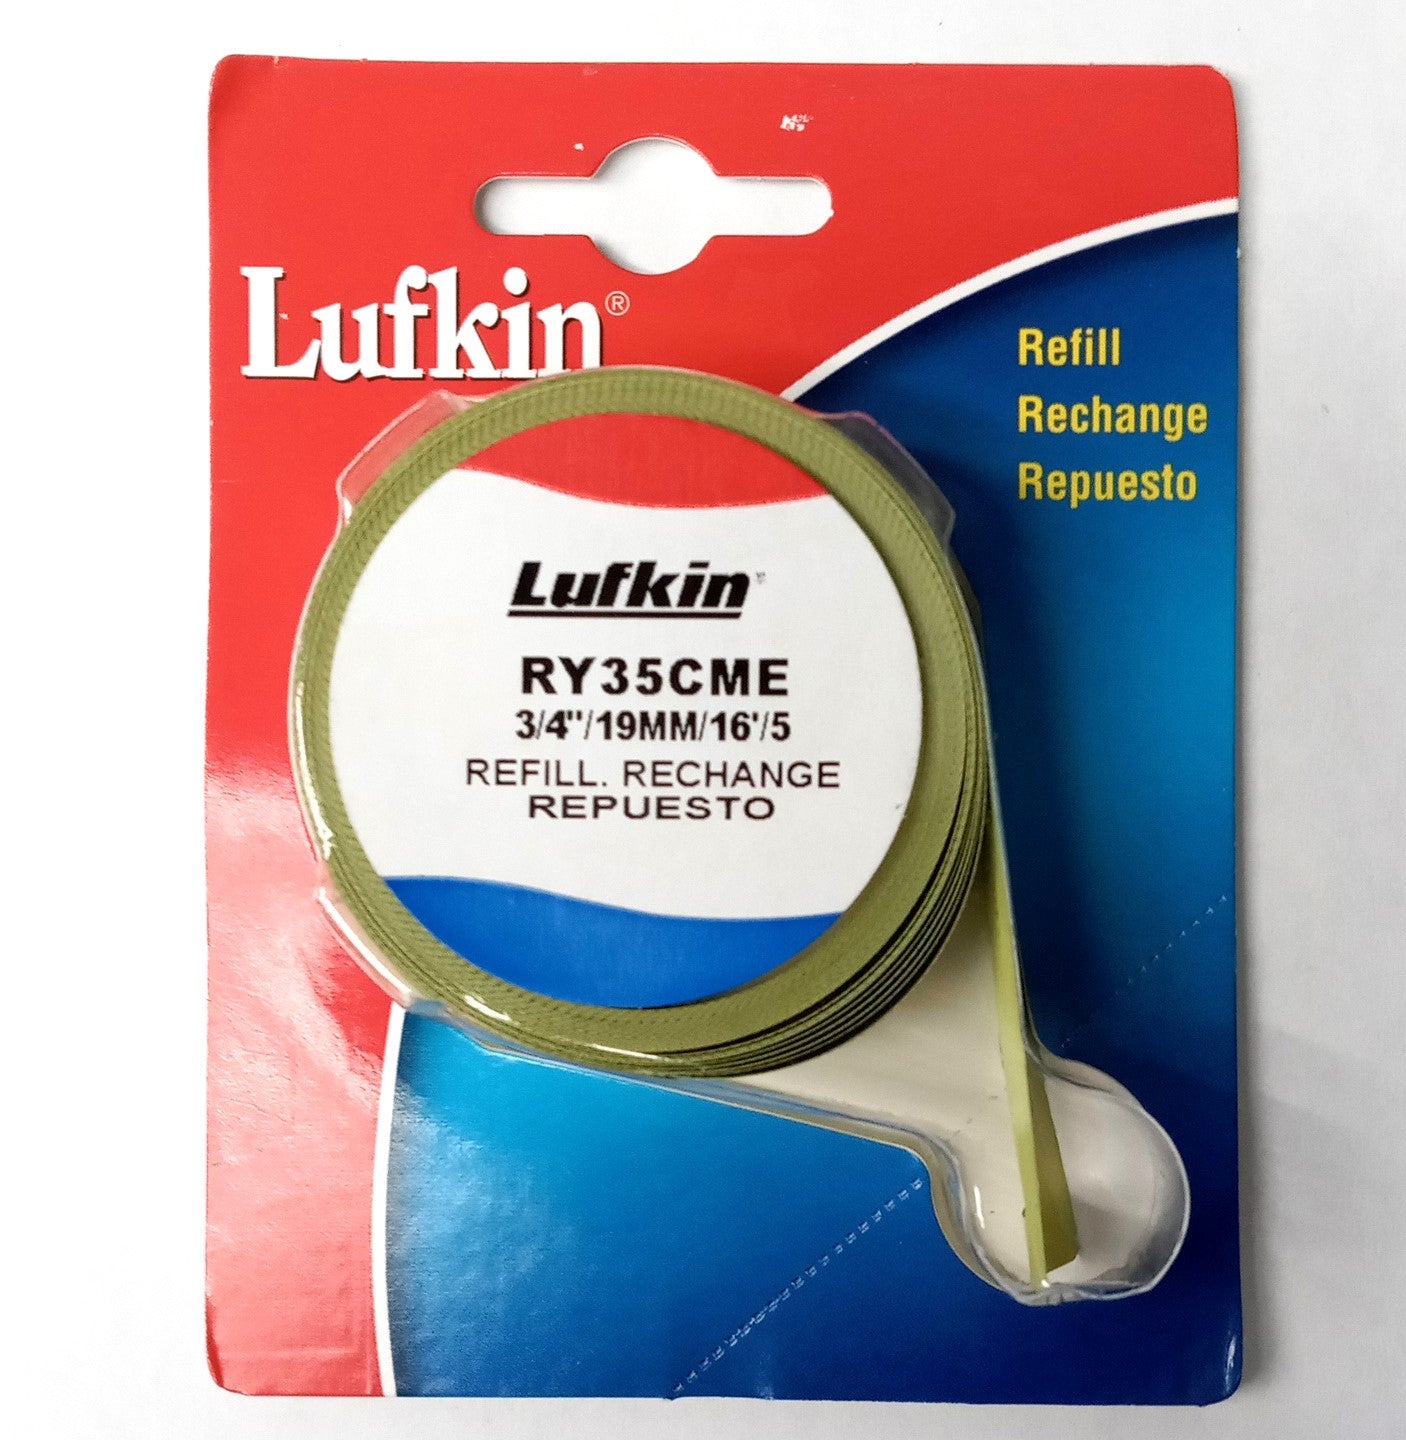 Lufkin RY35CME Yellow Steel Universal Tape Refill 3/4" x 16'